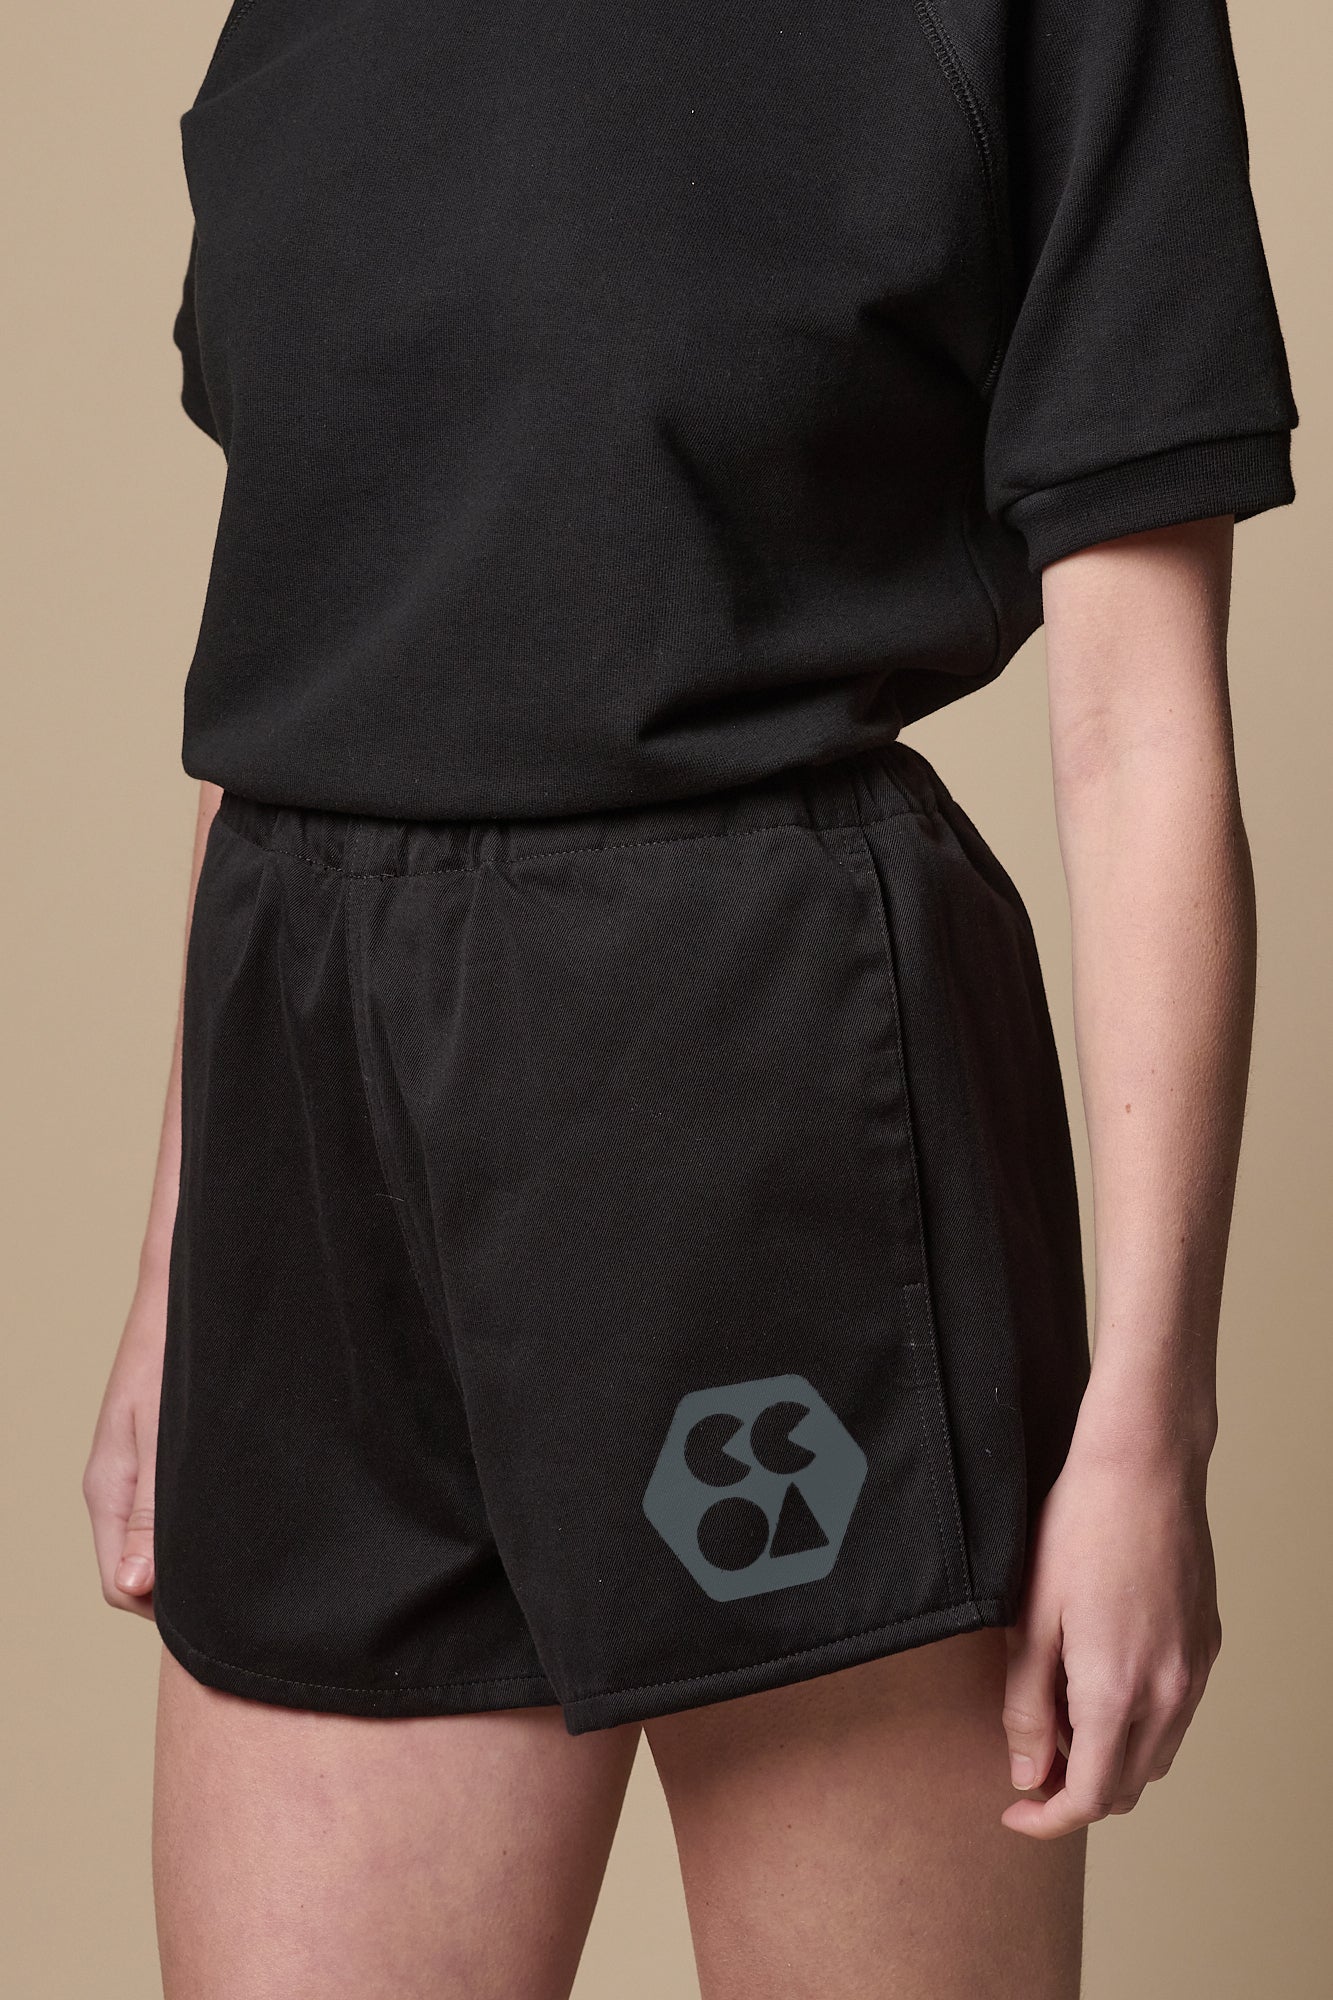 Female wearing heavyweight sports short plastic free in black with CCOA logo on models left leg